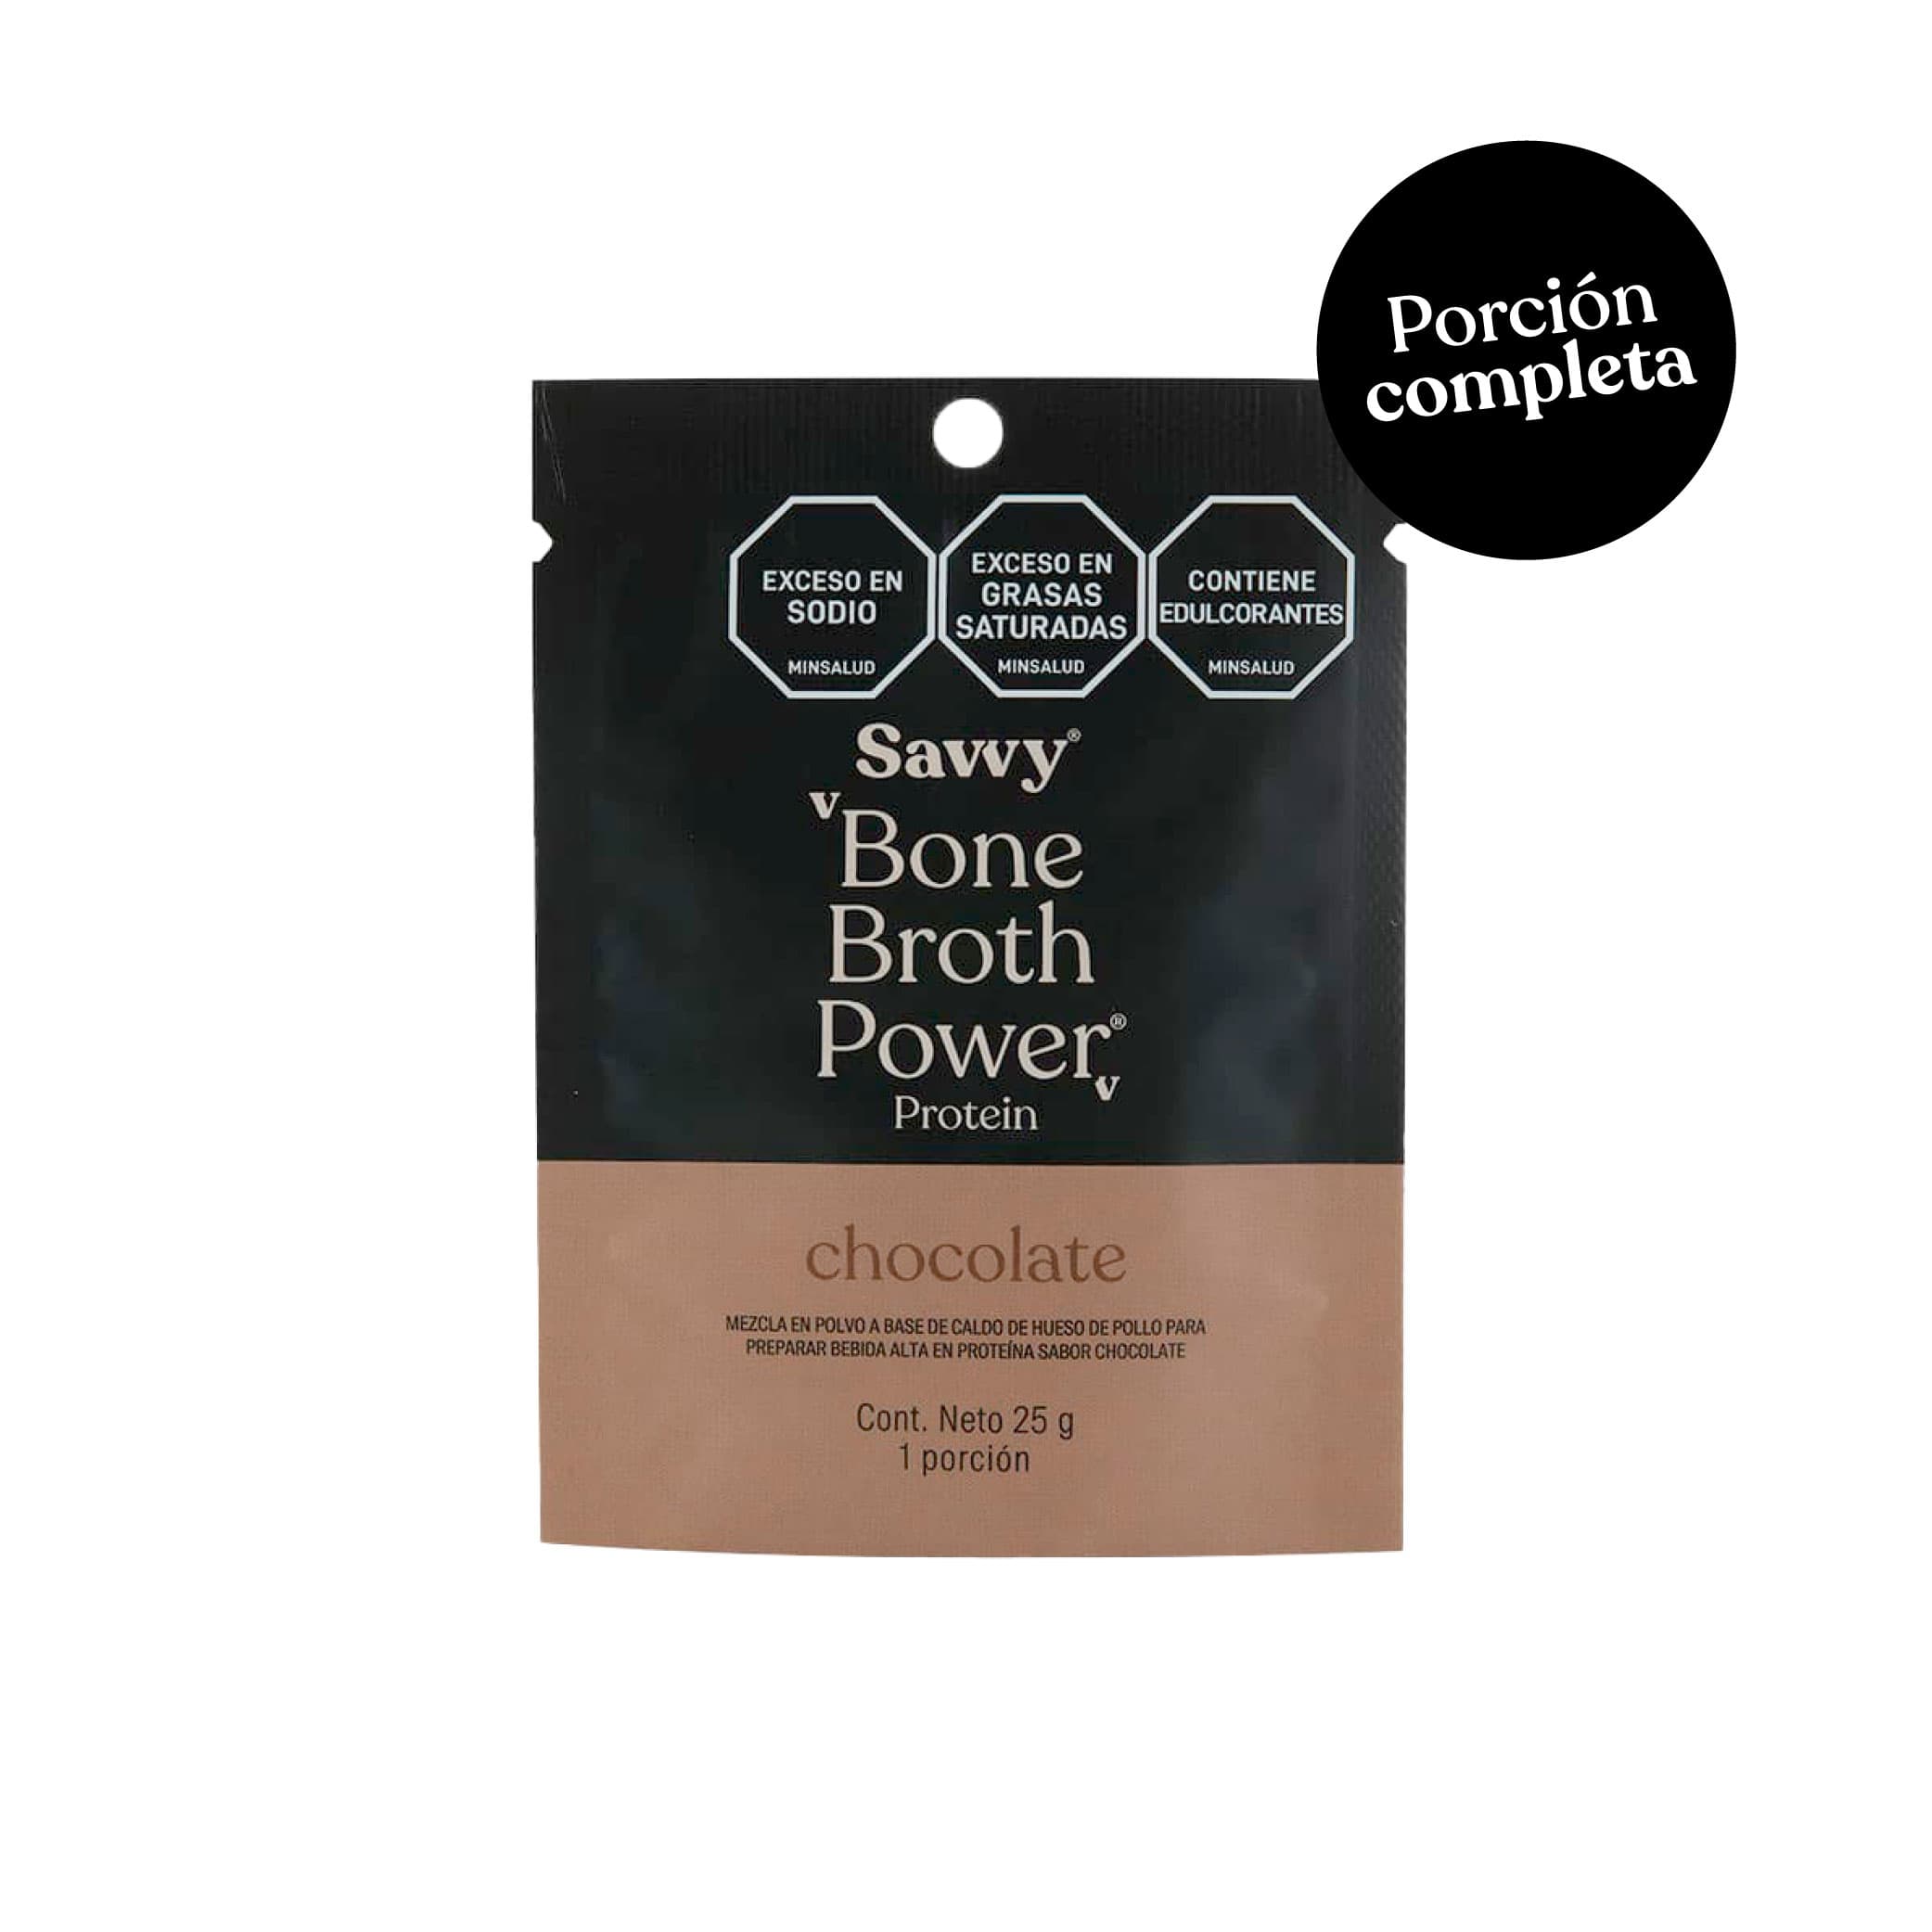 Bone Broth Power® chocolate sachet 25gr